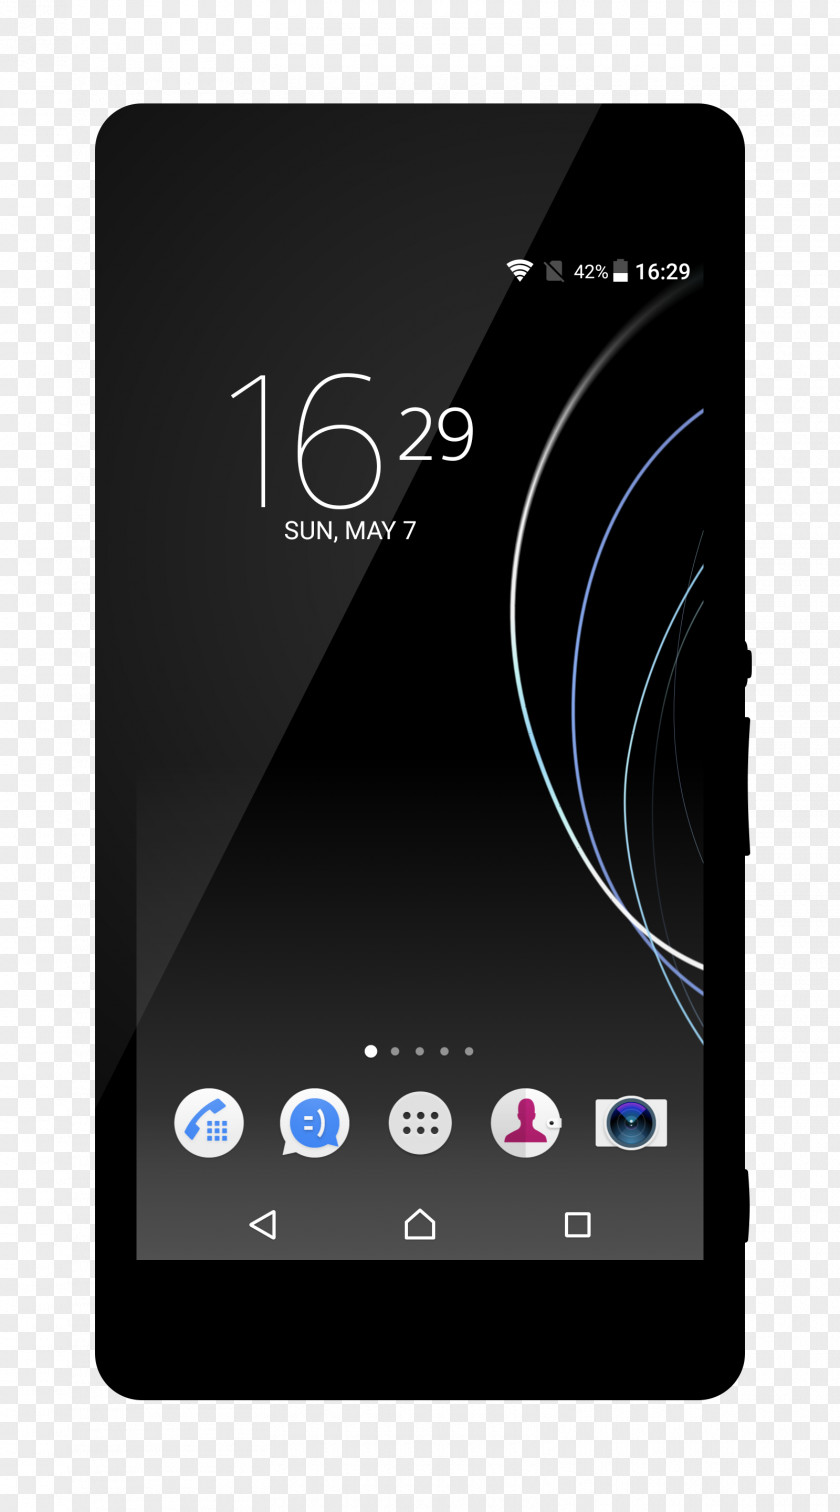 Satellite Theme Smartphone Sony Xperia XZs Feature Phone XZ Premium PNG